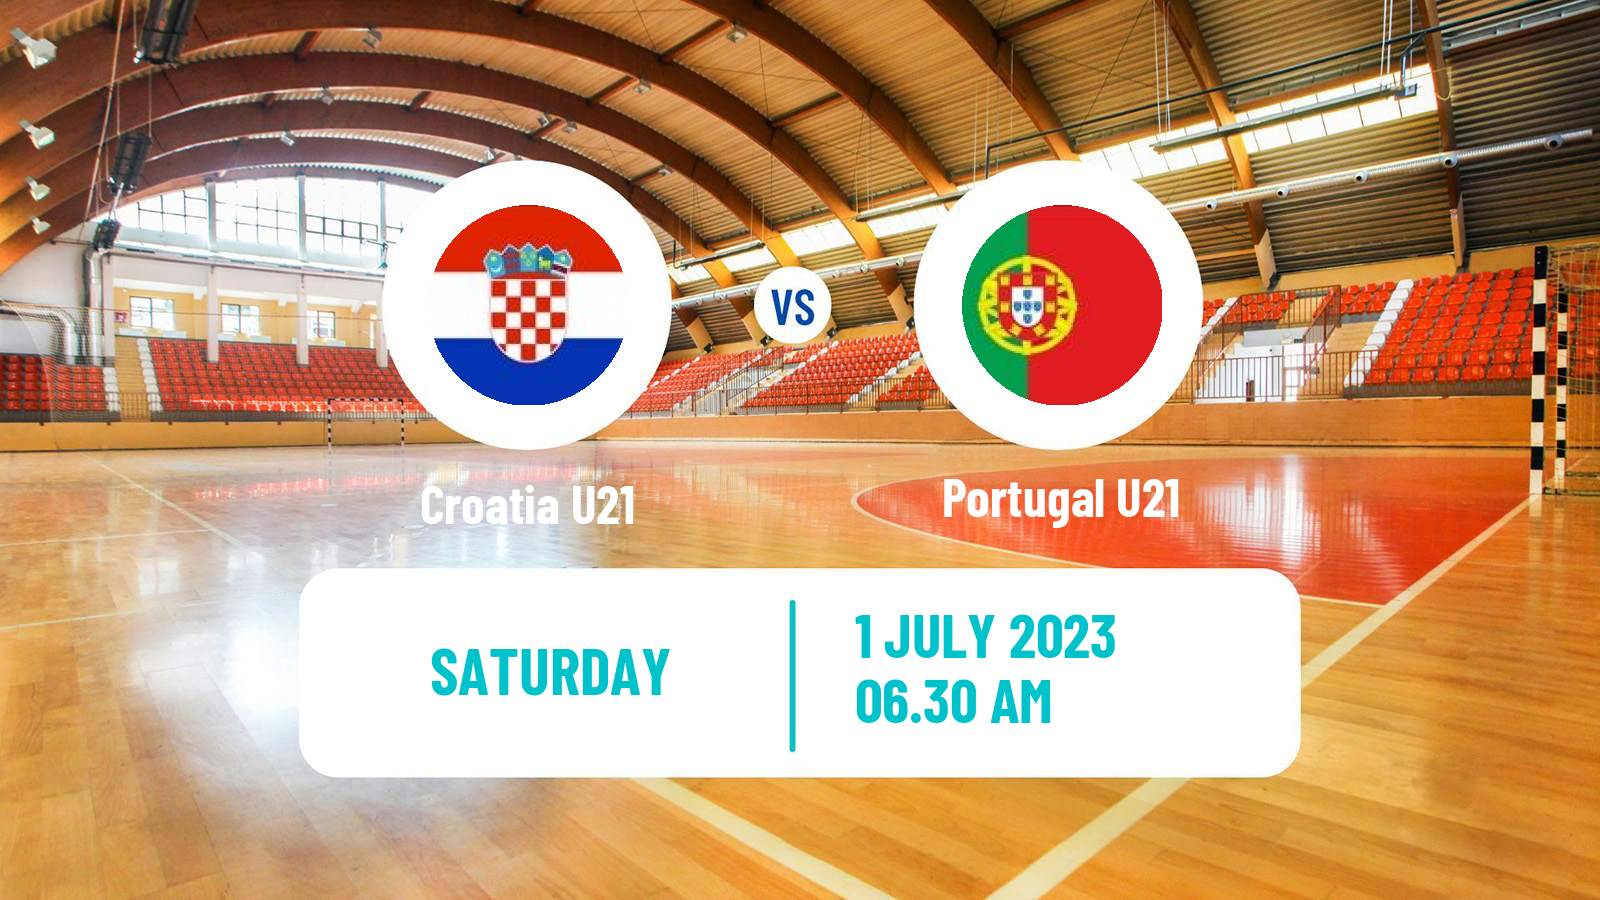 Handball World Championship U21 Handball Croatia U21 - Portugal U21